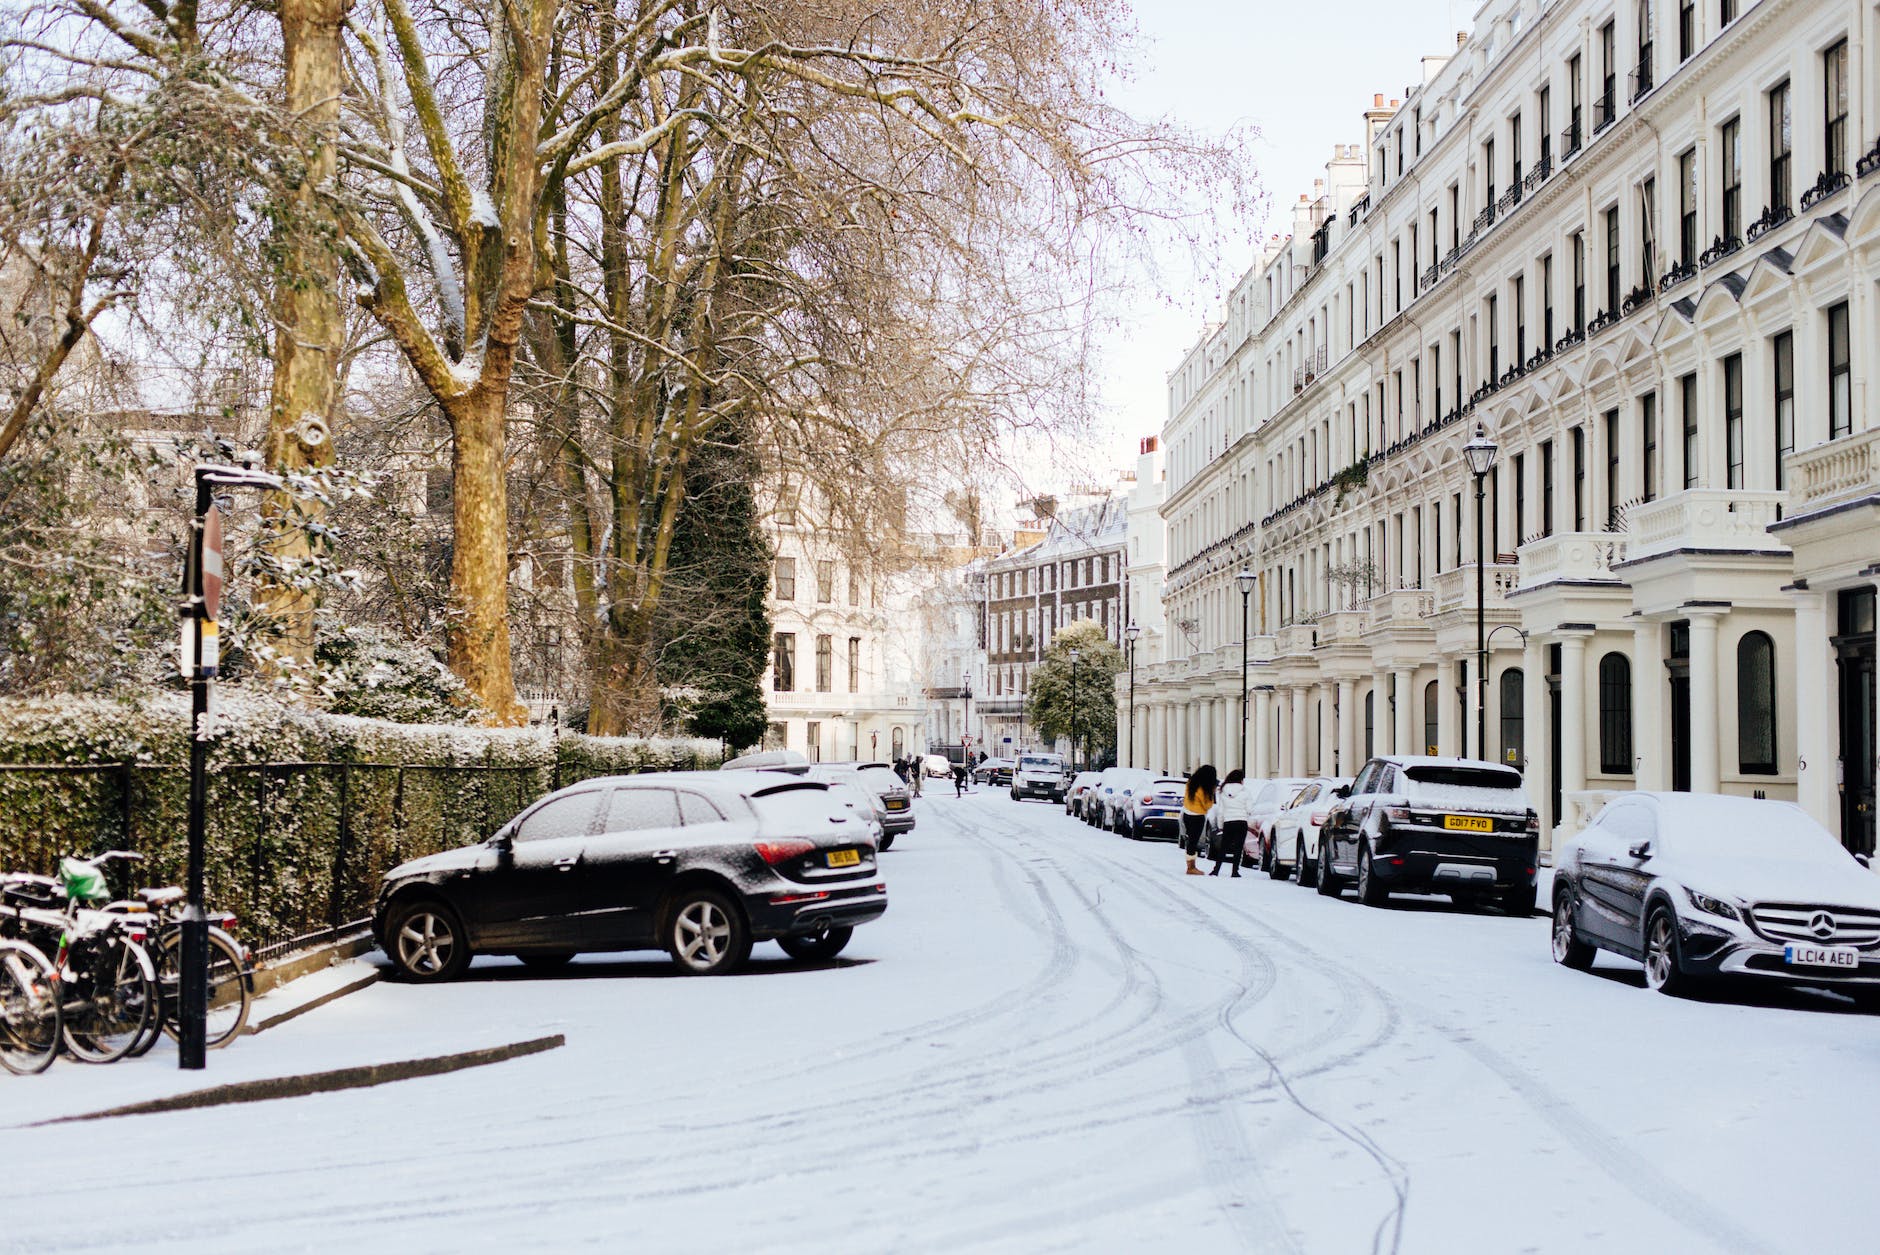 Snowy London street